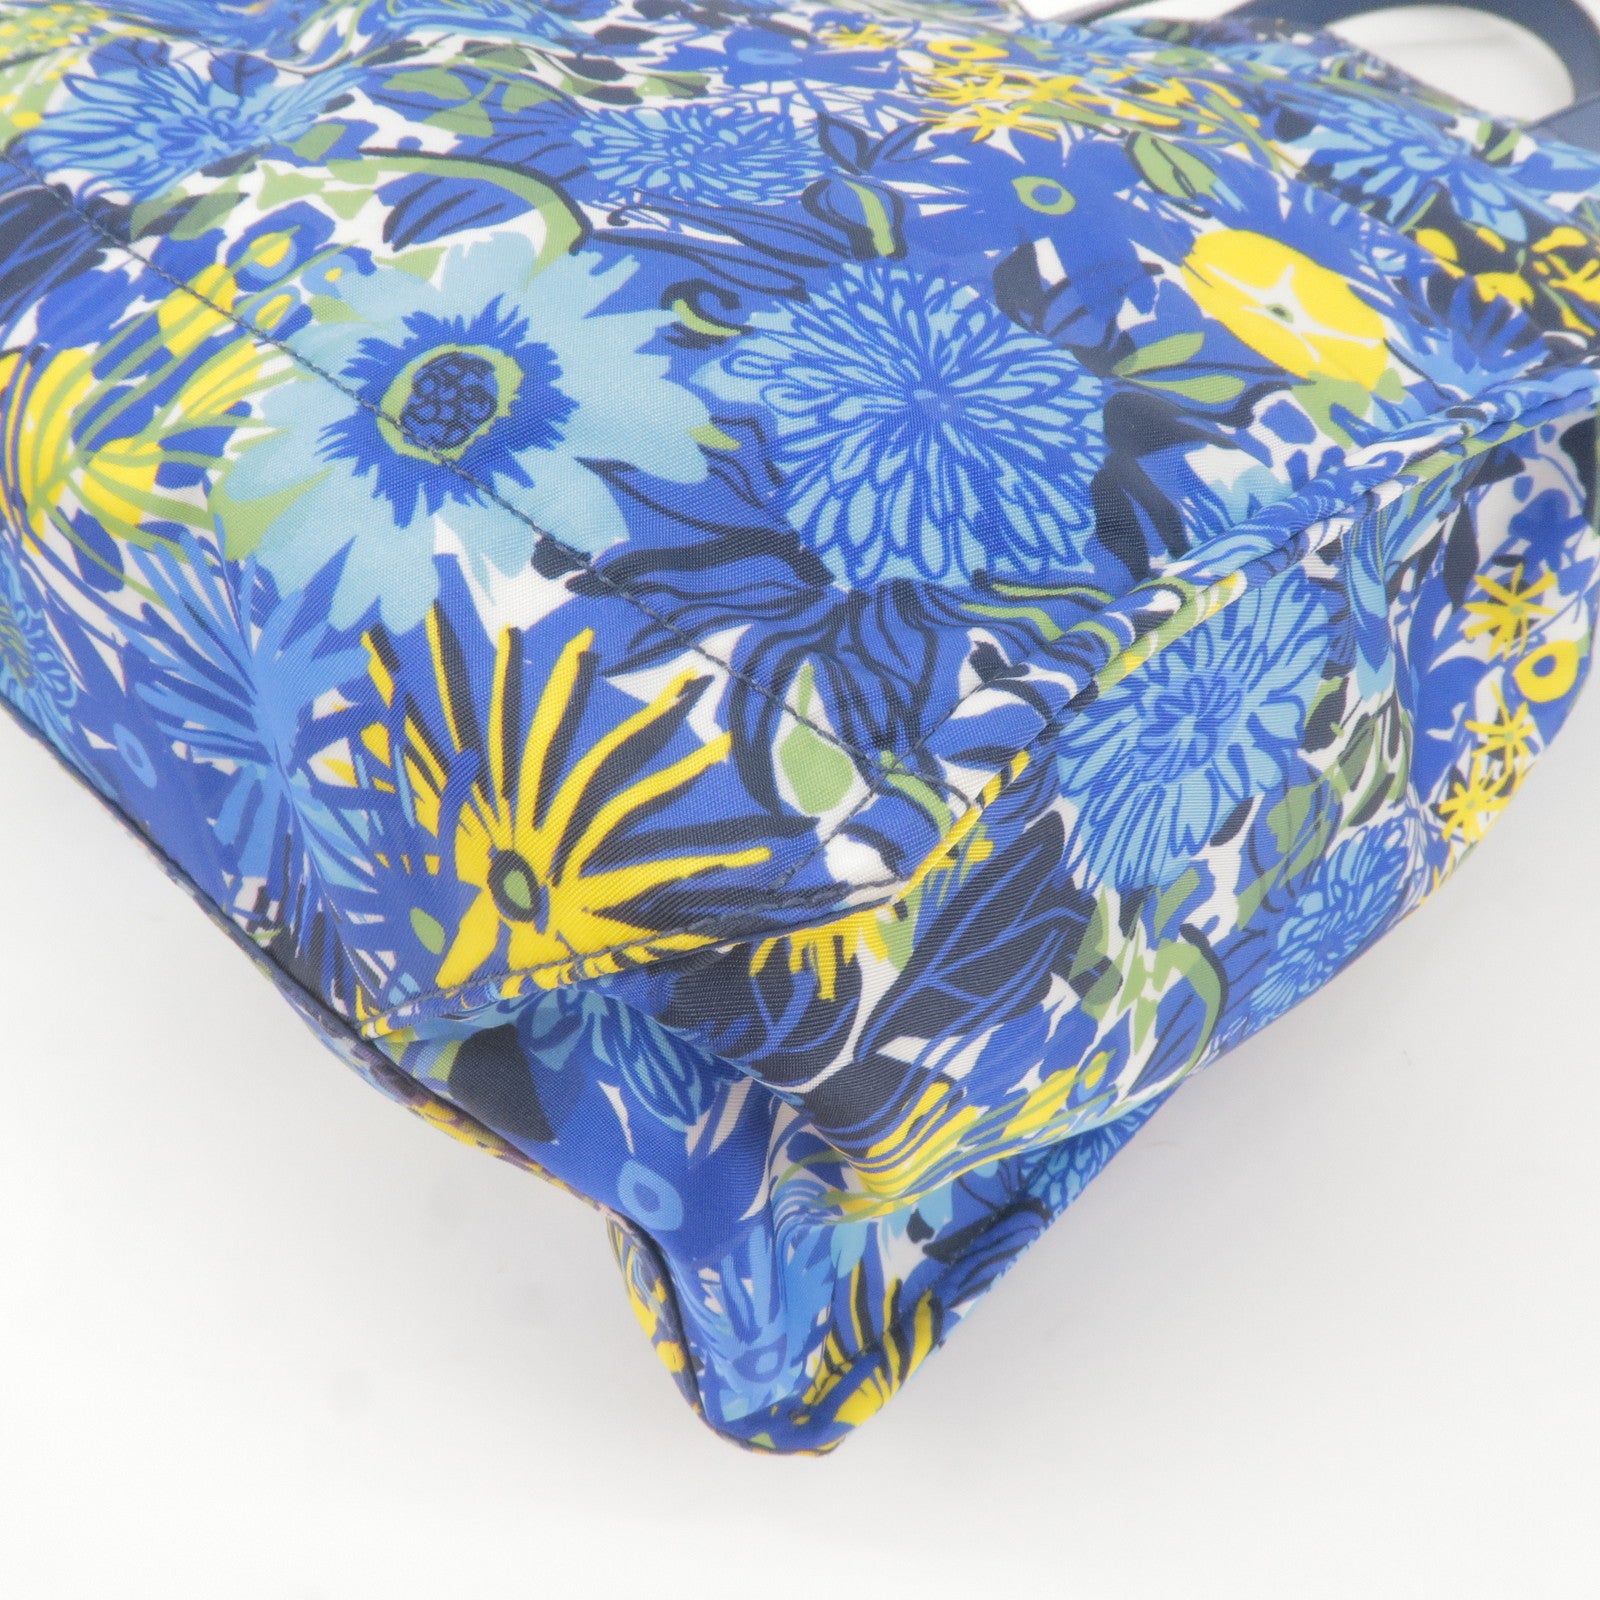 PRADA - Blue - Floral - Tote - Nylon - Bag - Print - Leather